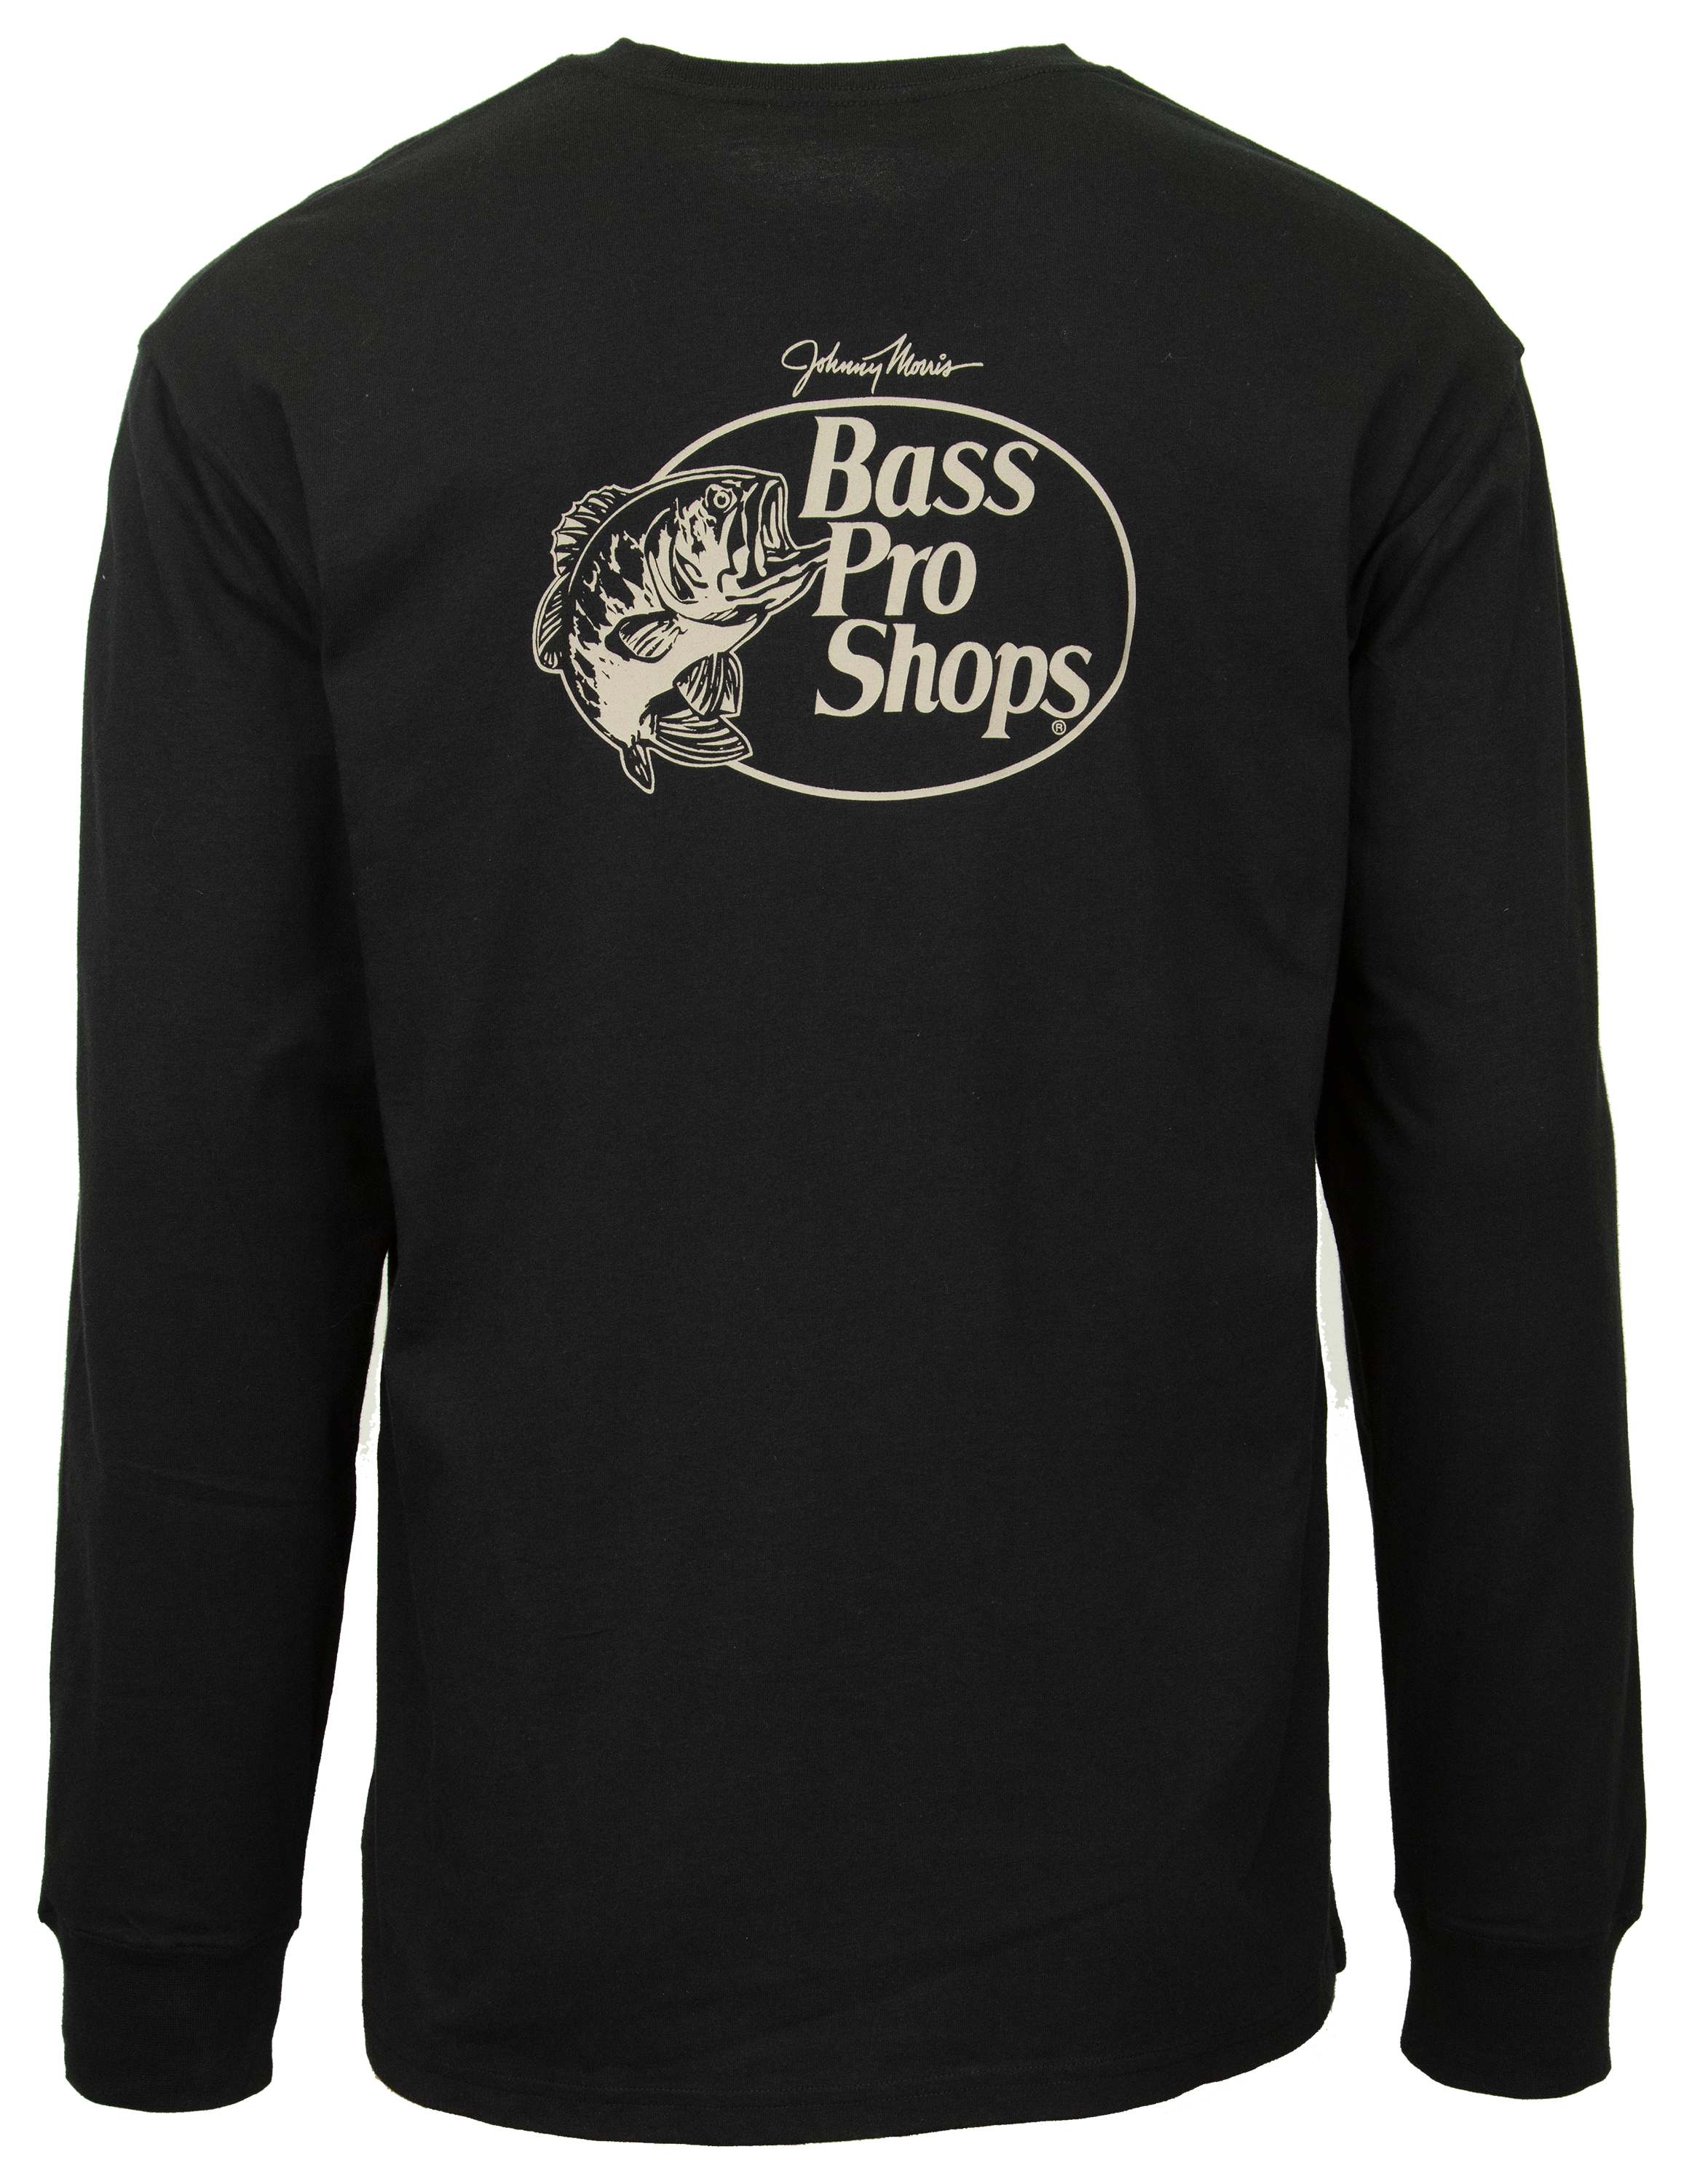 Bass Pro Shops Original Logo Printed Long-Sleeve T-Shirt for Men